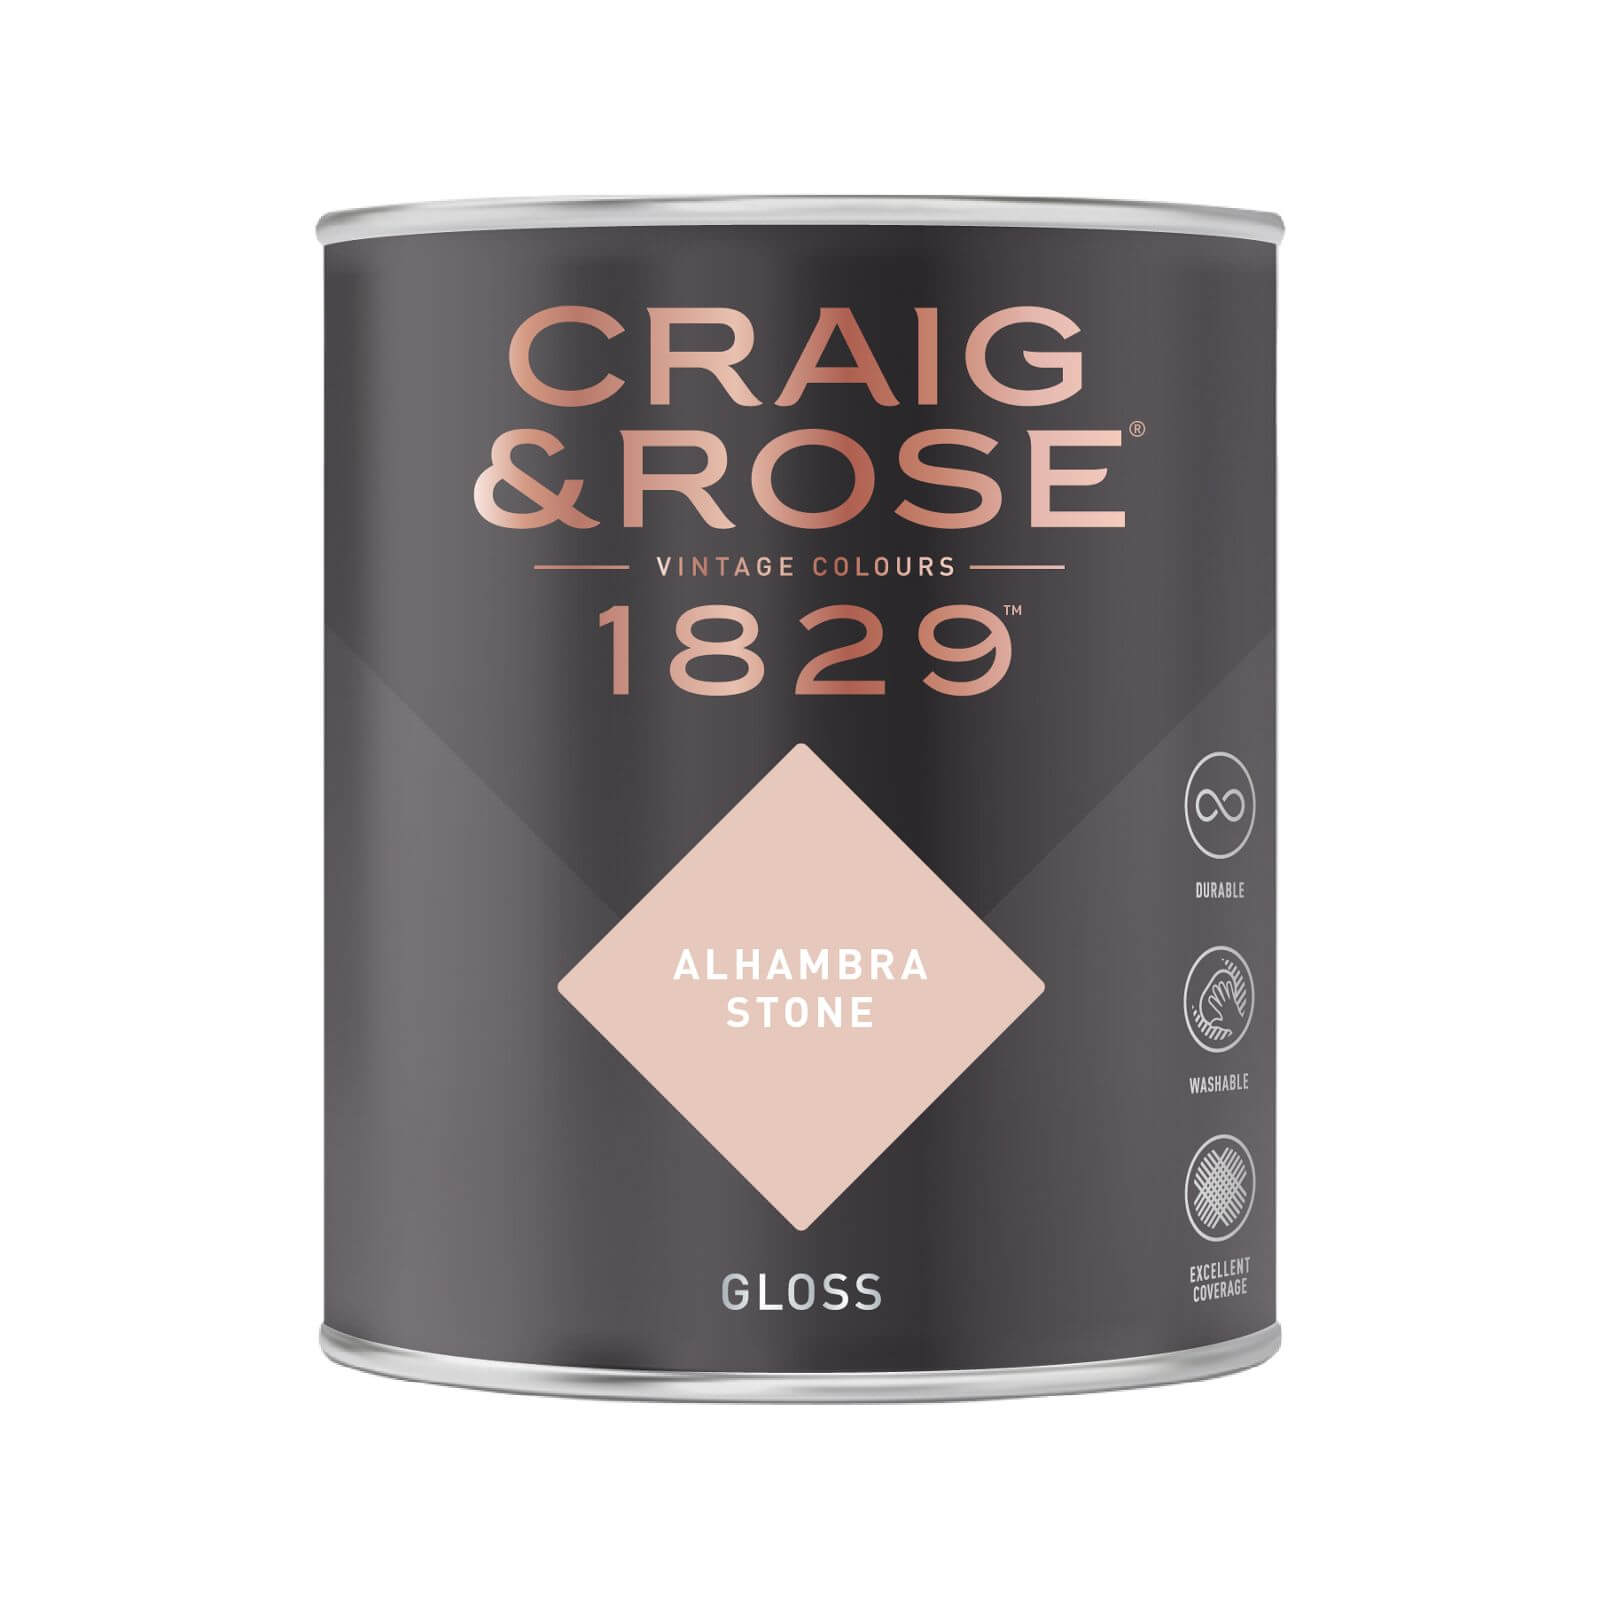 Craig & Rose 1829 Gloss Paint Alhambra Stone - 750ml